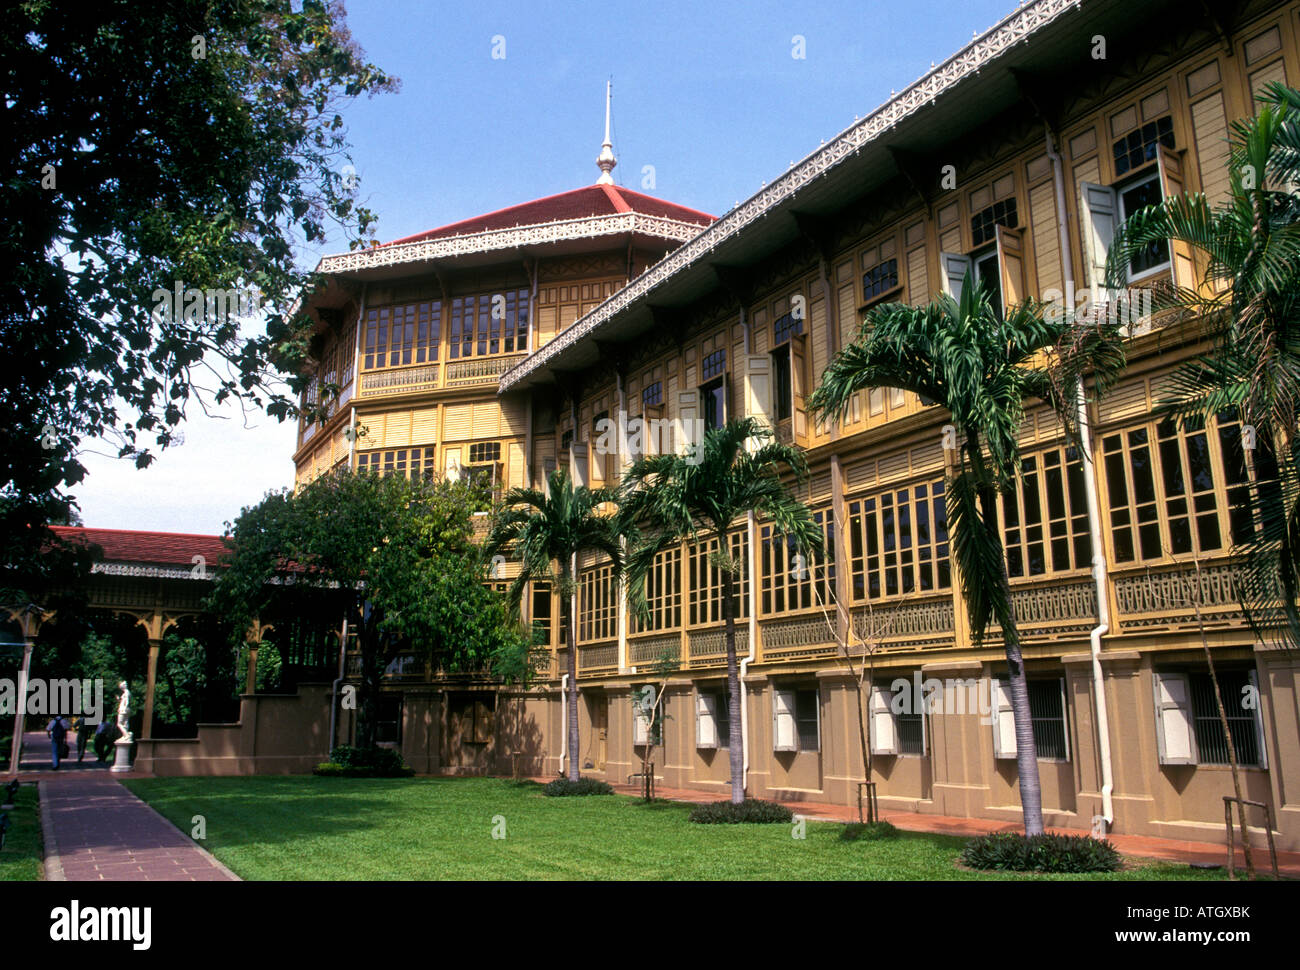 Vimanmek Palace Vimanmek Mansion former royal palace now a museum in Dusit Garden Dusit Palace capital city of Bangkok Thailand Stock Photo